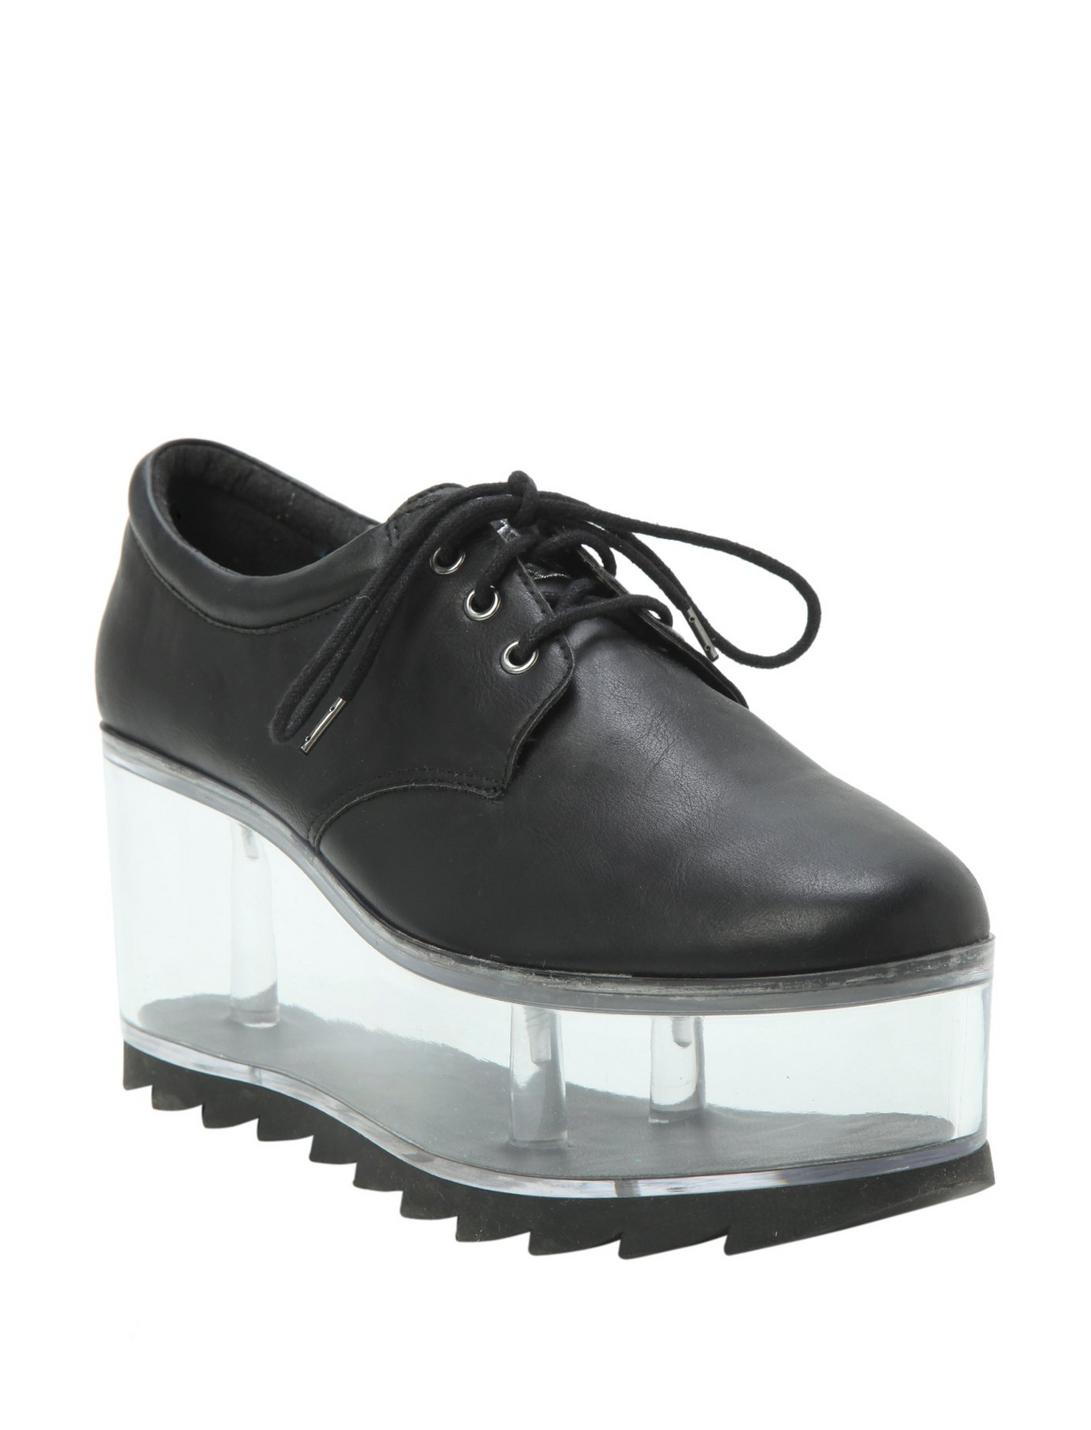 Black & Clear Platform Shoes